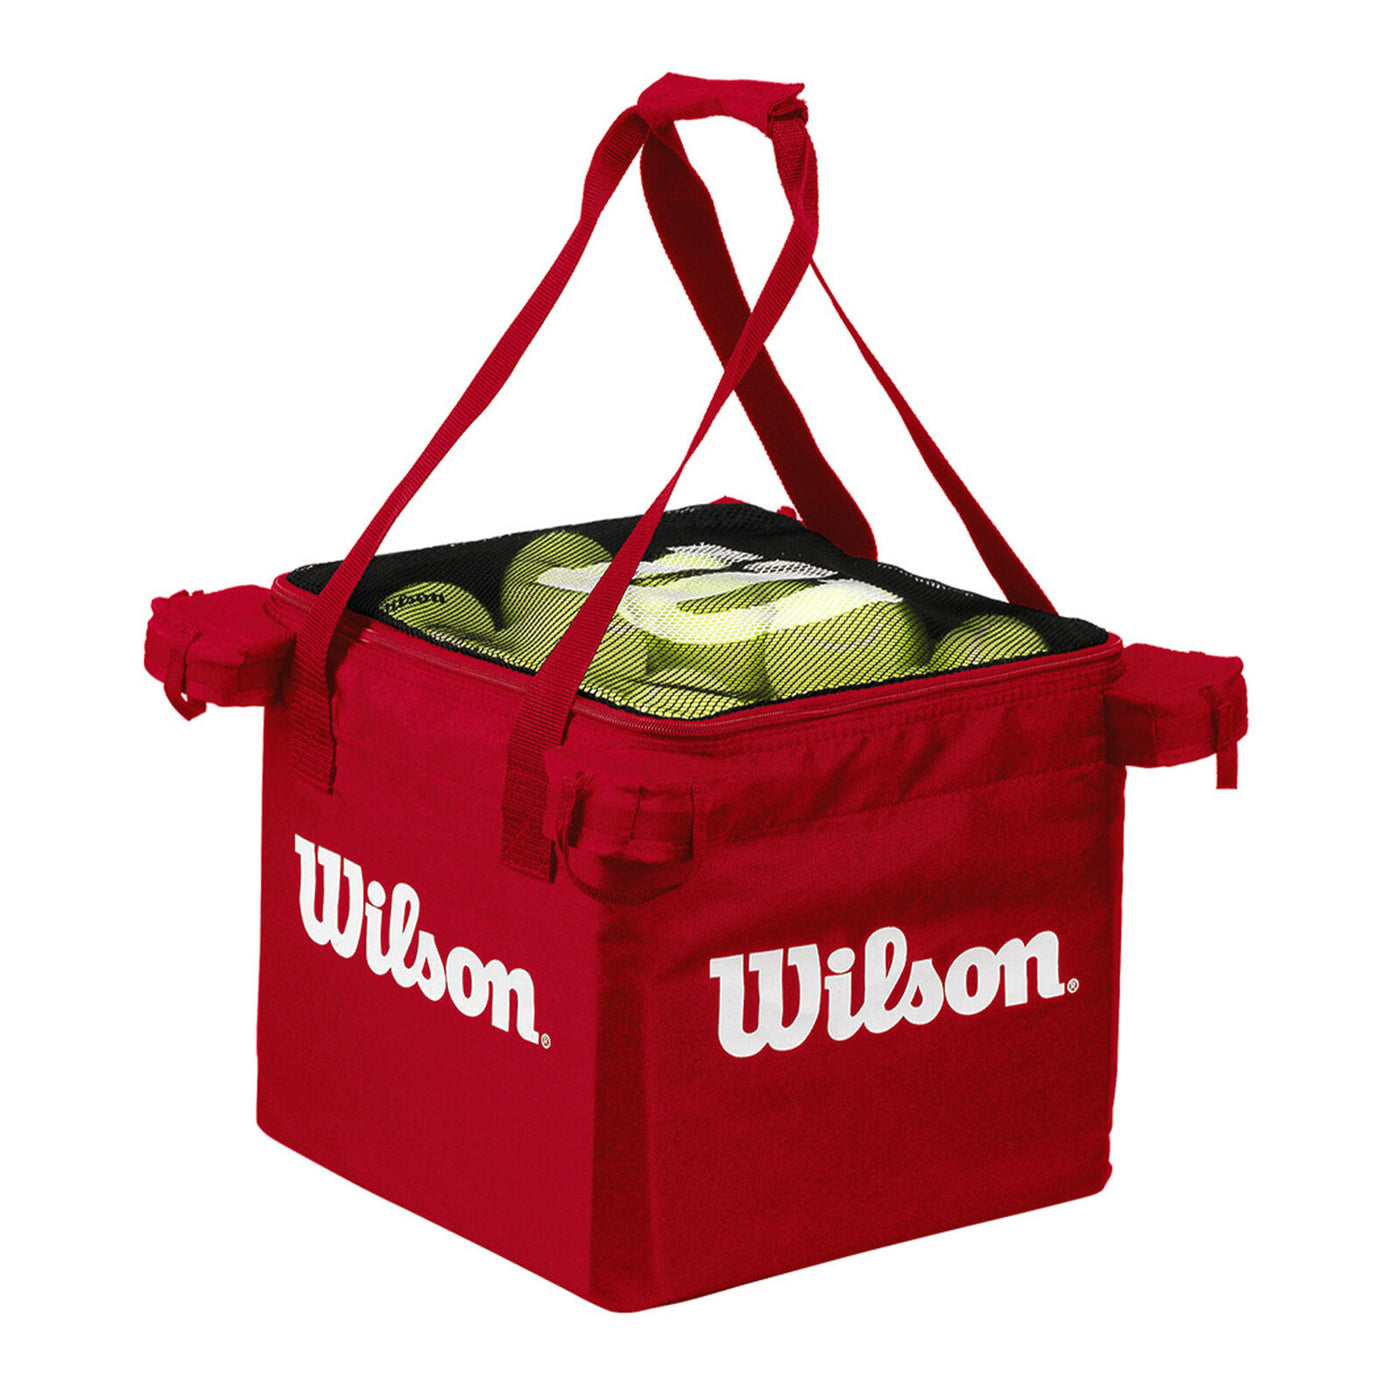 Wilson Teaching Cart Bag - Red